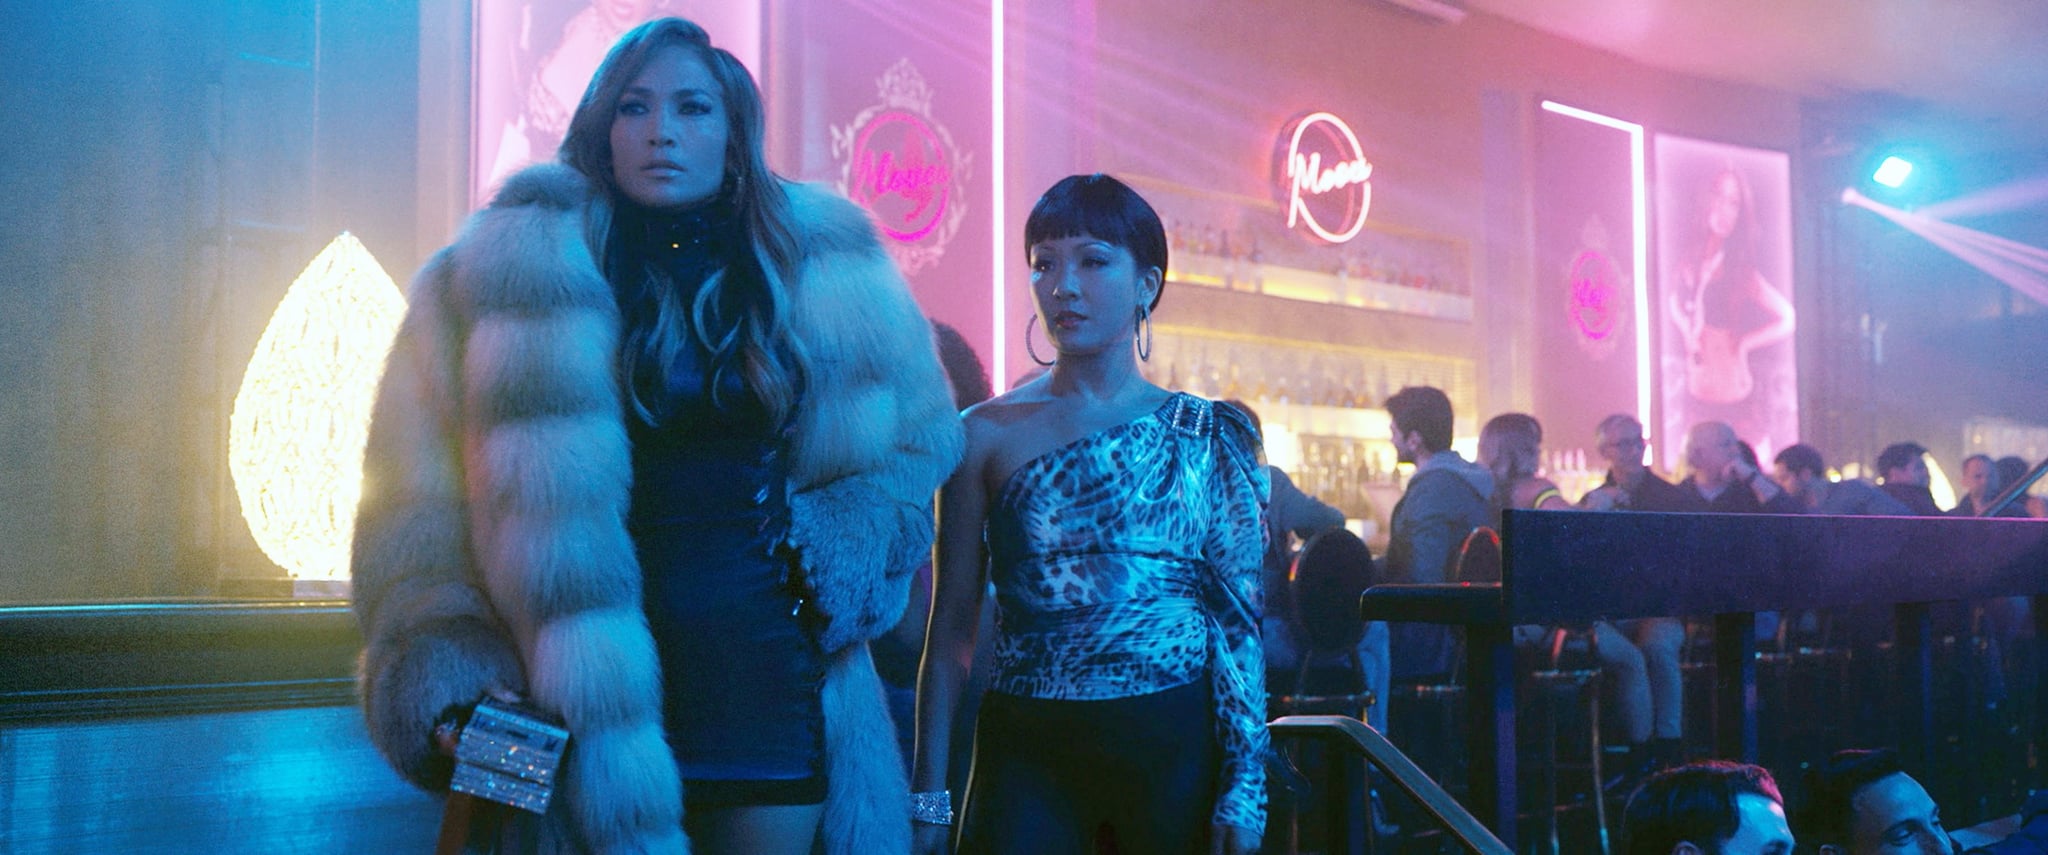 HUSTLERS, from left: Jennifer Lopez, Constance Wu, 2019.  STX Entertainment / courtesy Everett Collection